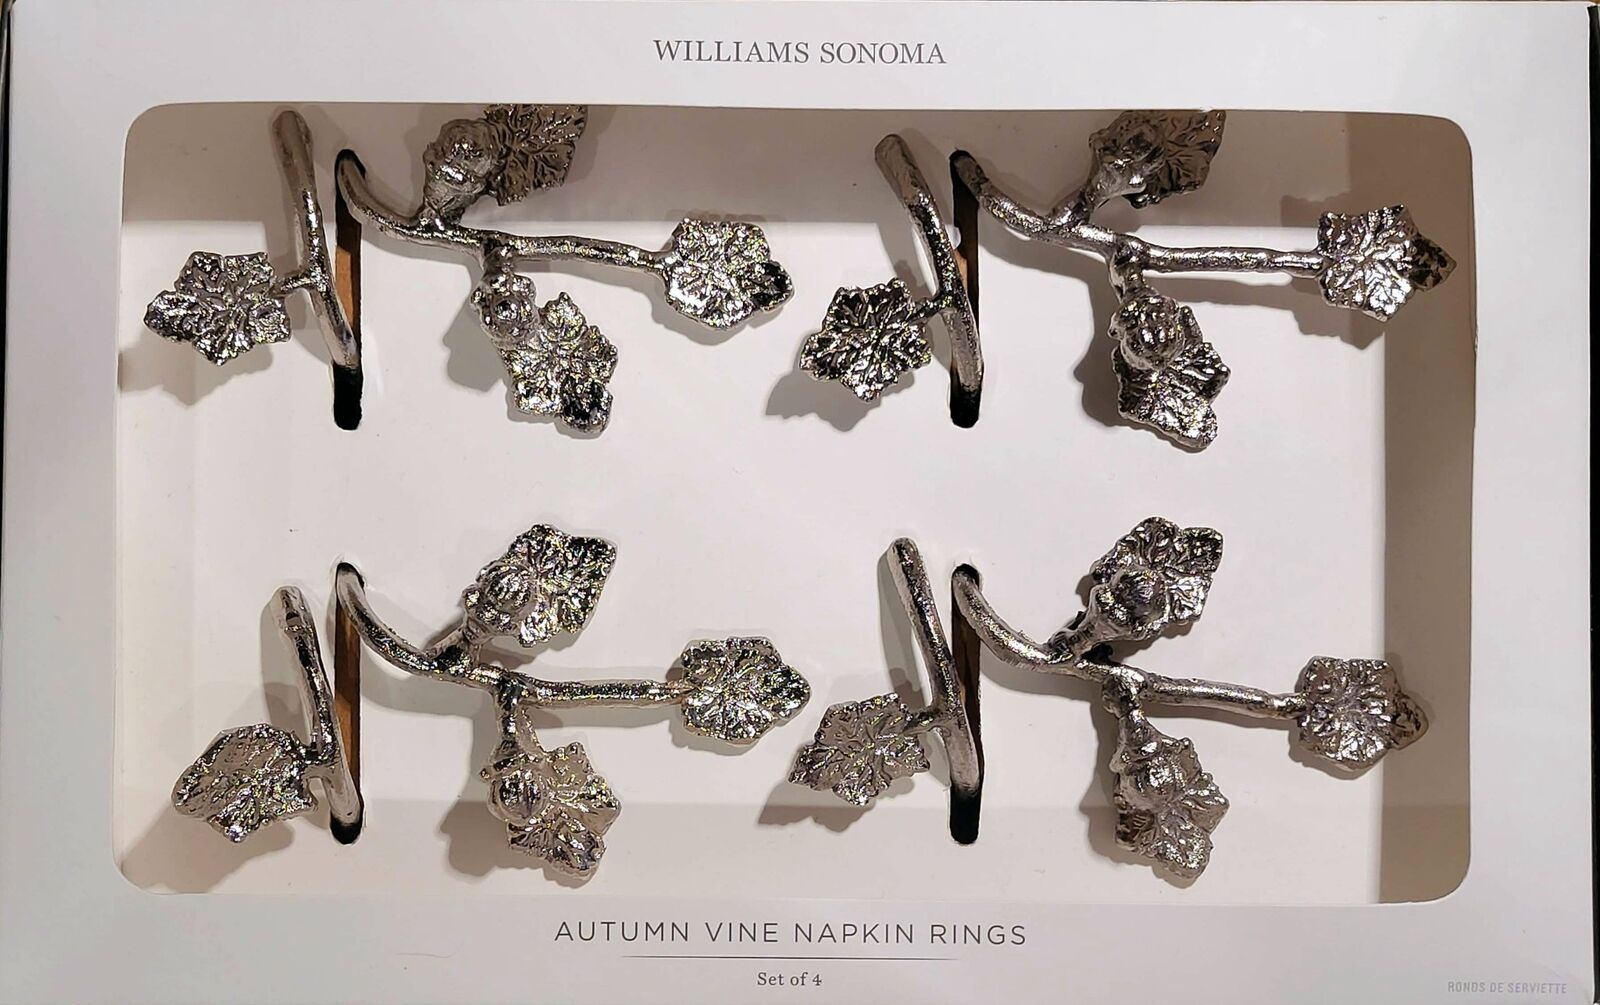 New Williams Sonoma Silver Autumn Vine Napkin Rings, Set of 4